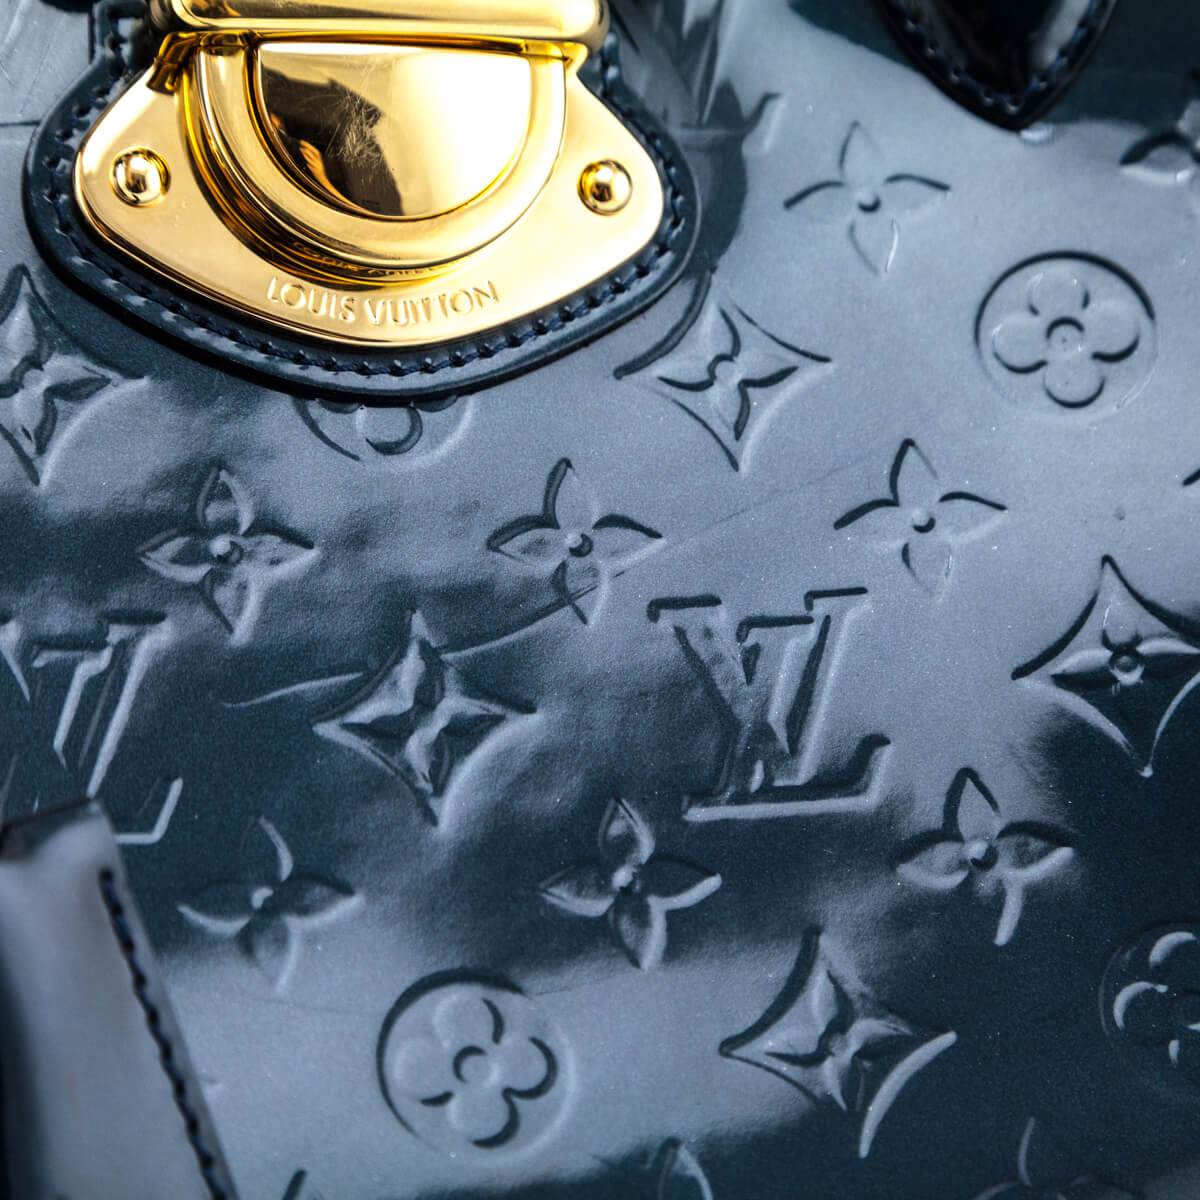 Louis Vuitton Vernis Melrose Avenue Bag - ShopperBoard